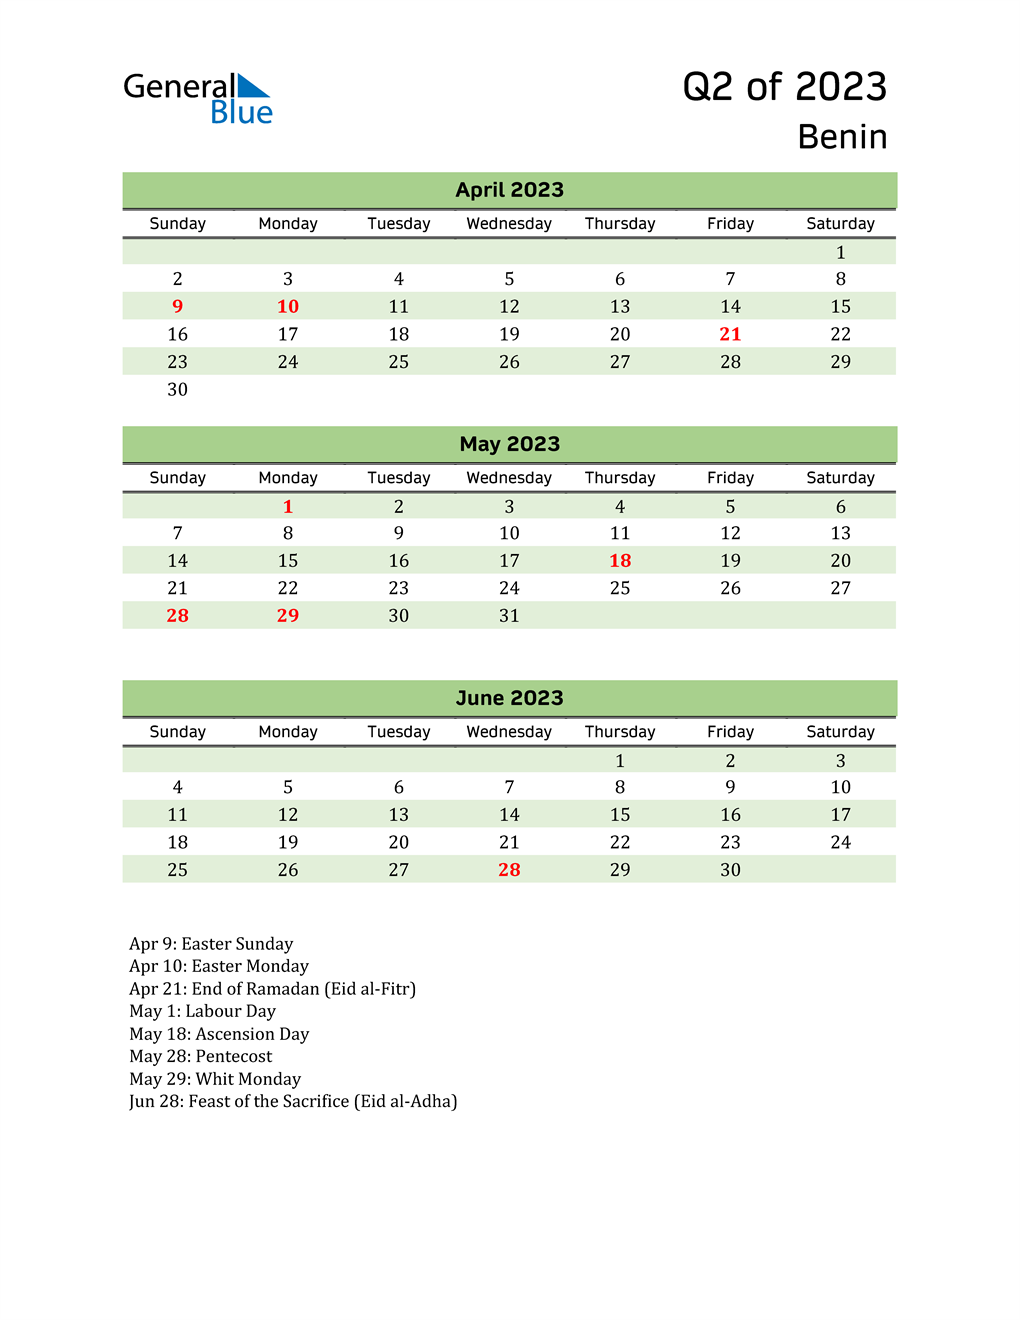  Quarterly Calendar 2023 with Benin Holidays 